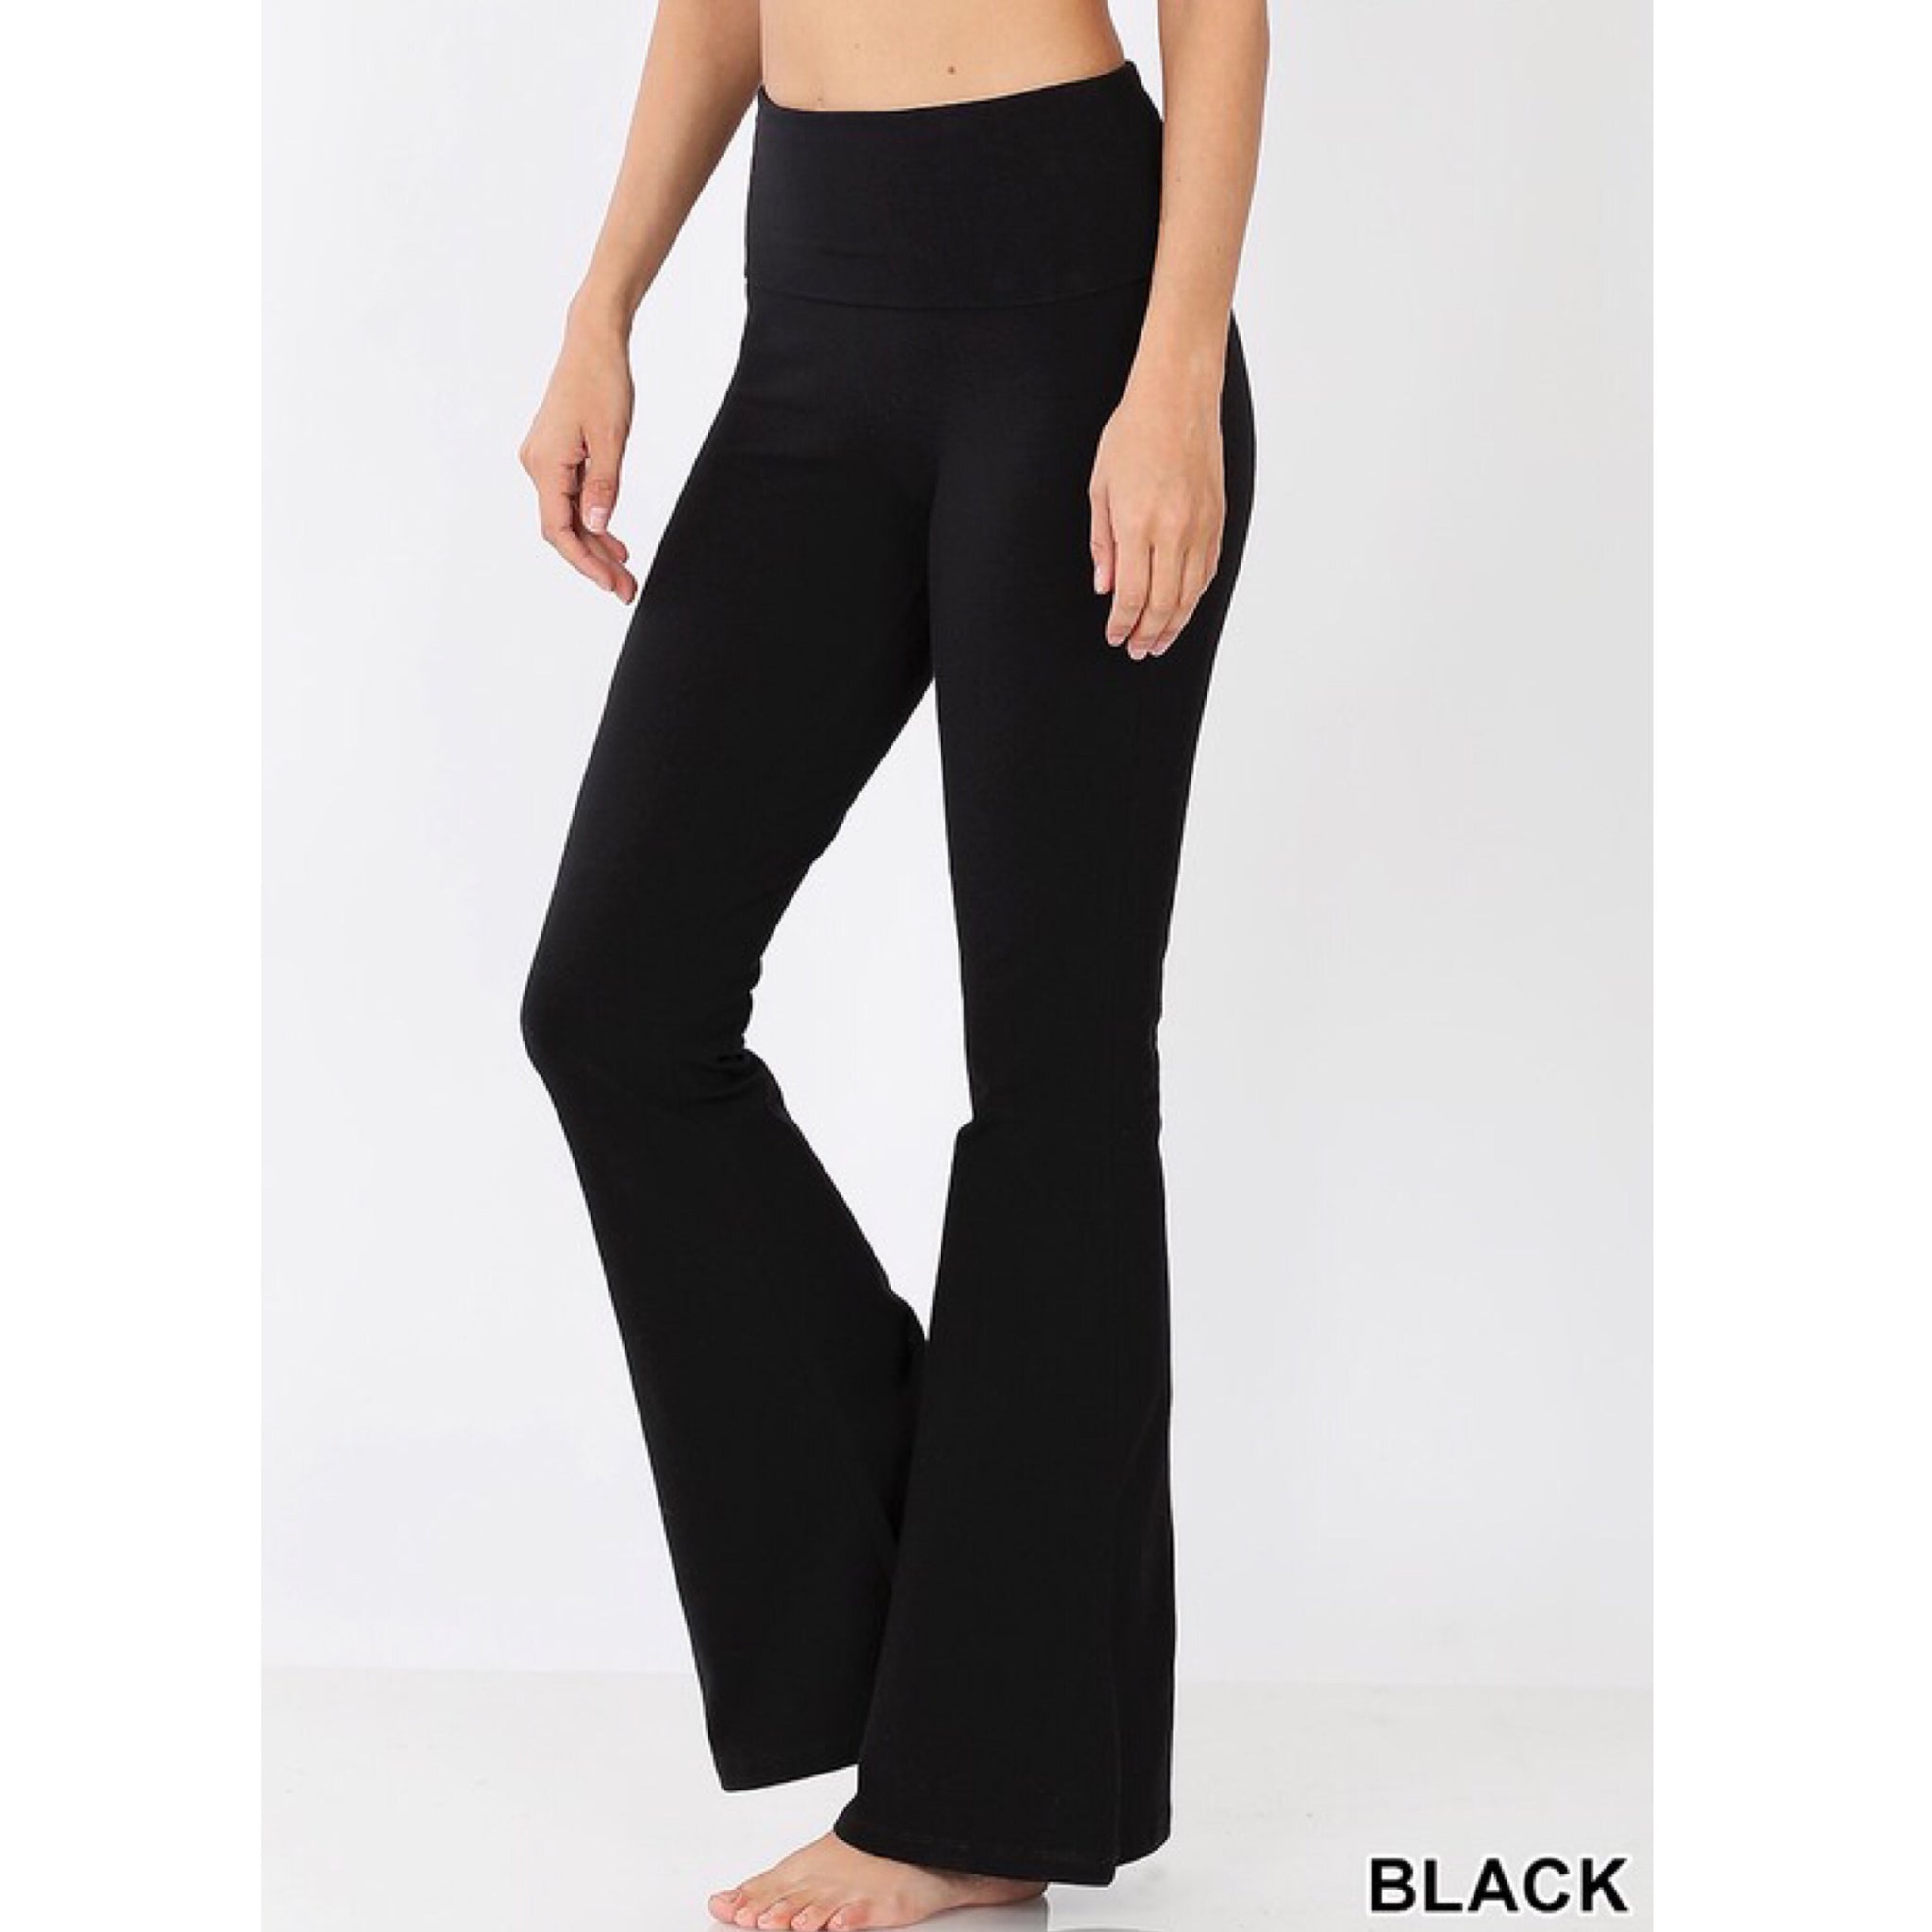 Glonme Ladies Ruched Yoga Pants Long Fitness Leggings Baggy Plain Bottoms  Black L 